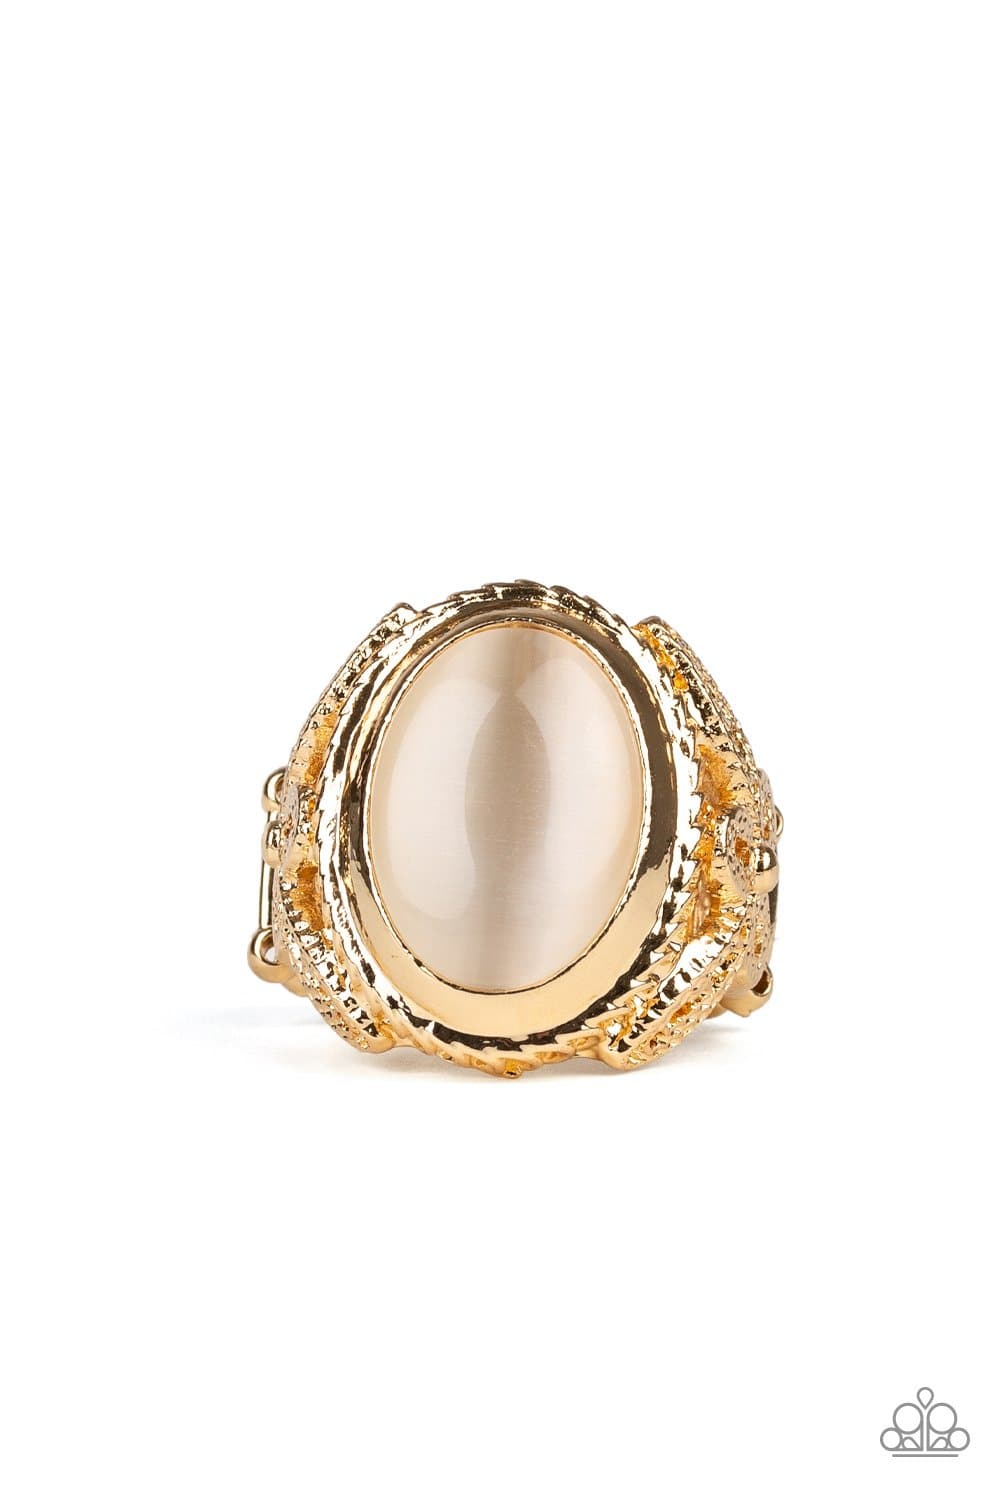 Deep Freeze - Gold Cat's Eye Ring - Paparazzi Accessories - GlaMarous Titi Jewels